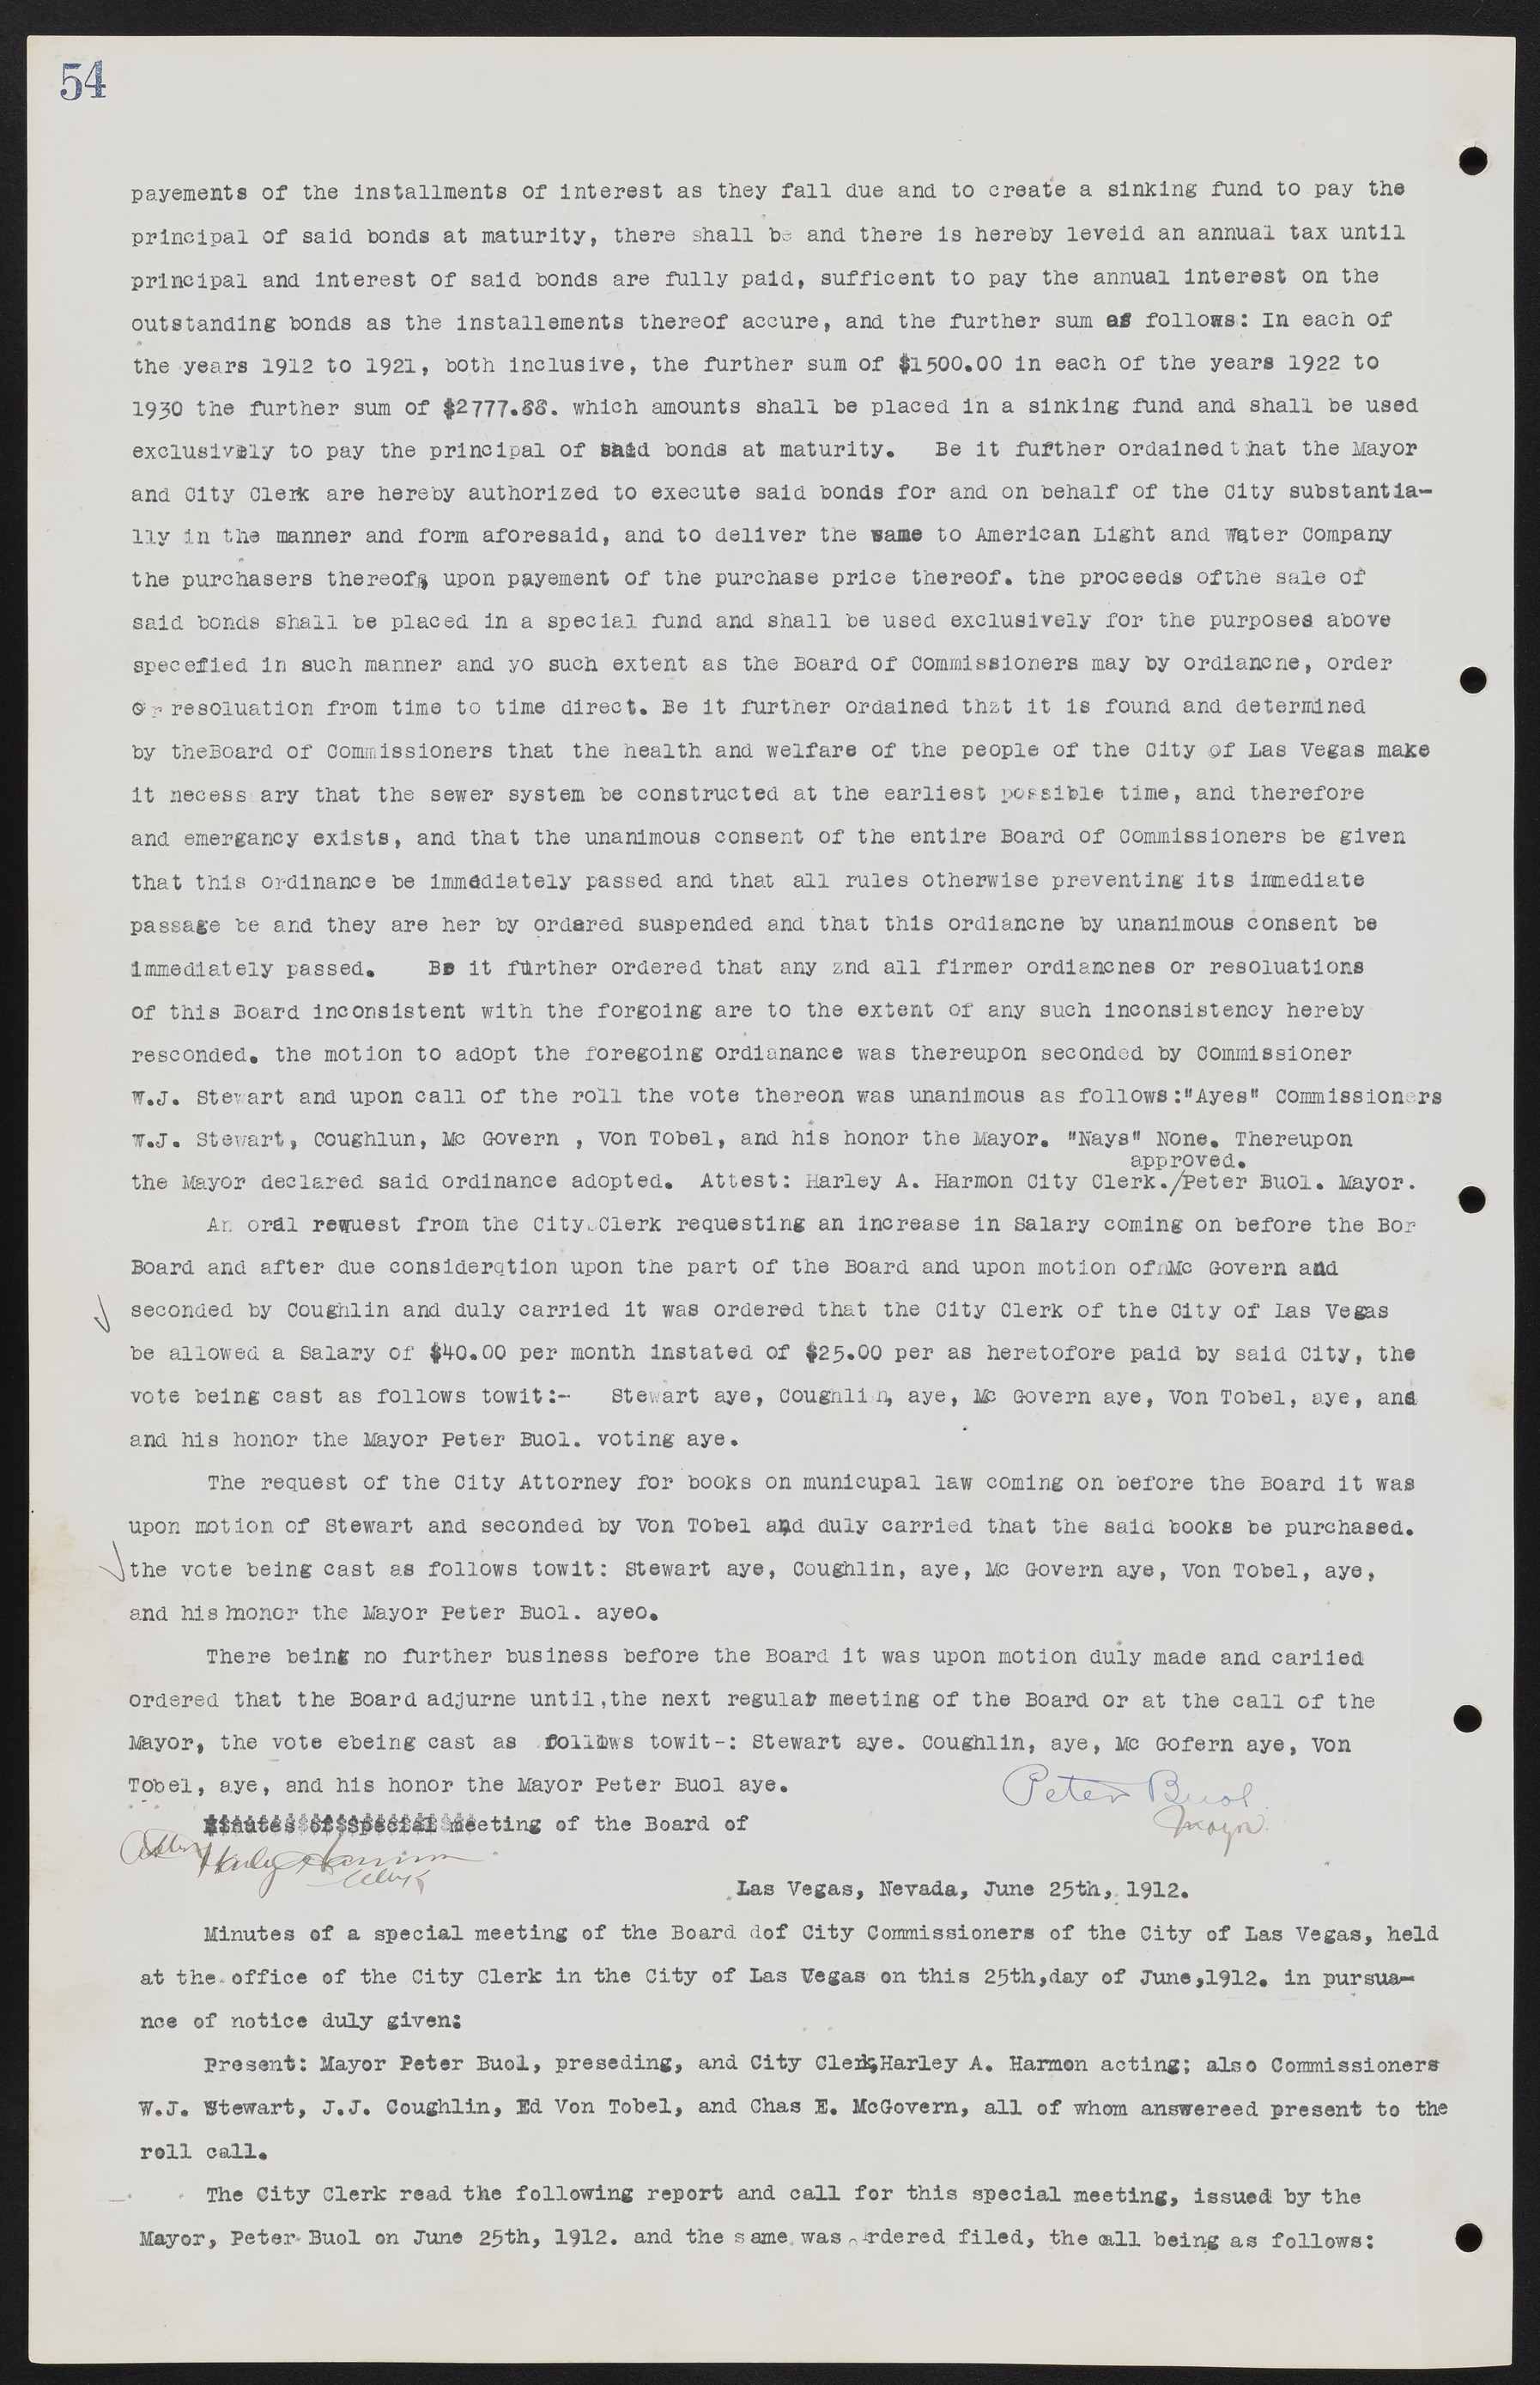 Las Vegas City Commission Minutes, June 22, 1911 to February 7, 1922, lvc000001-68